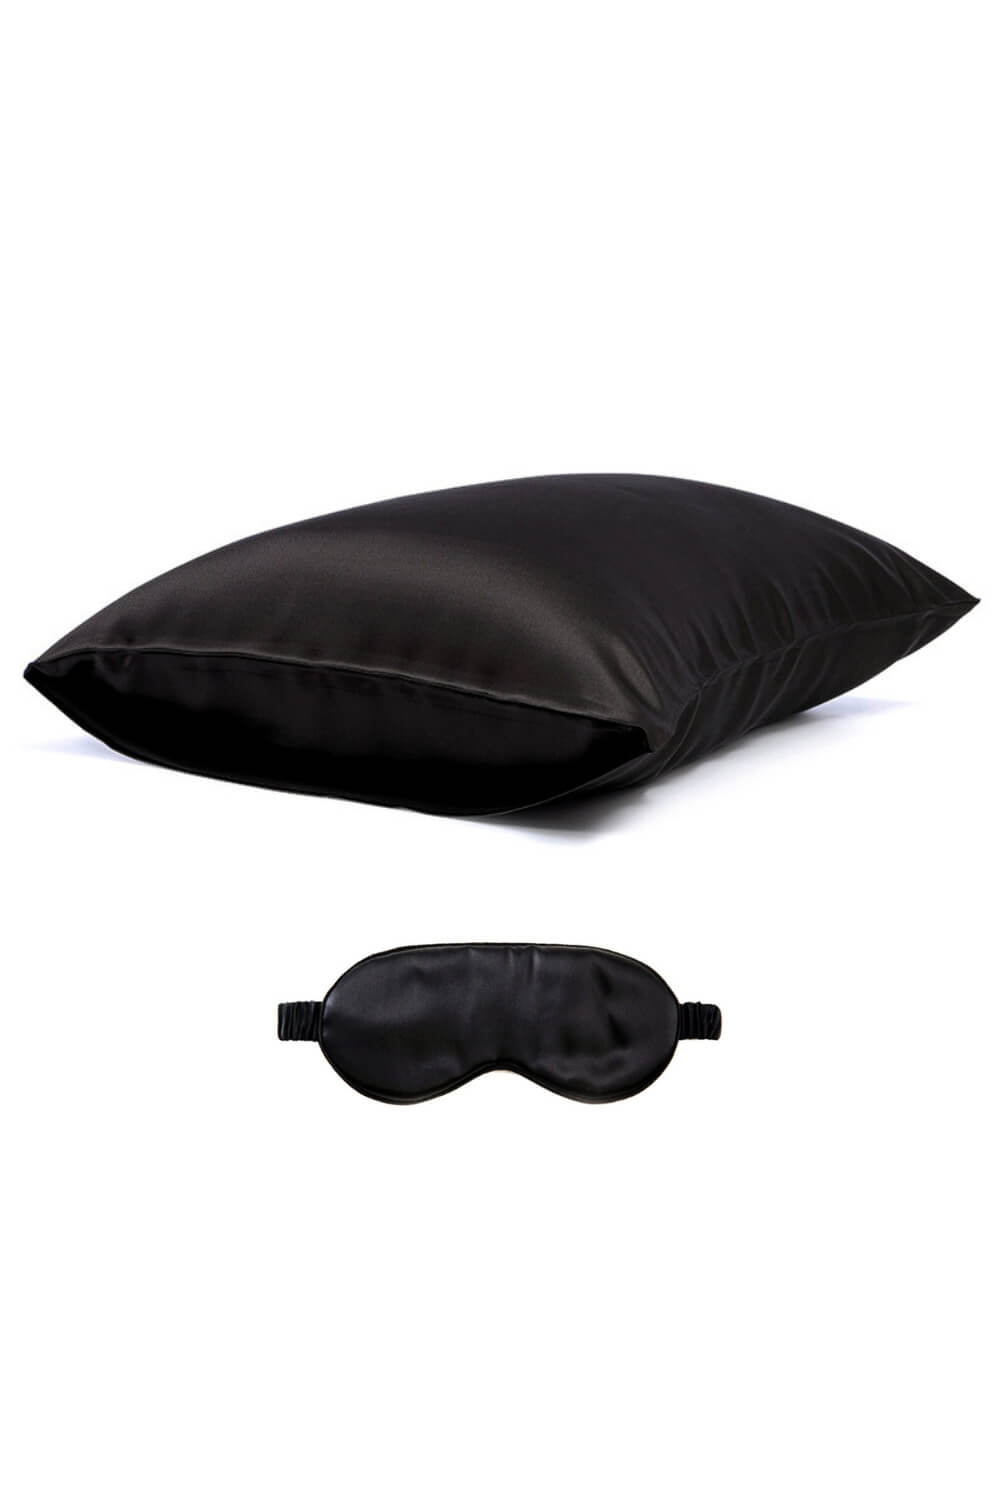 Silk Pillowcase and Silk Eye Mask Gift Set - Black - BASK™